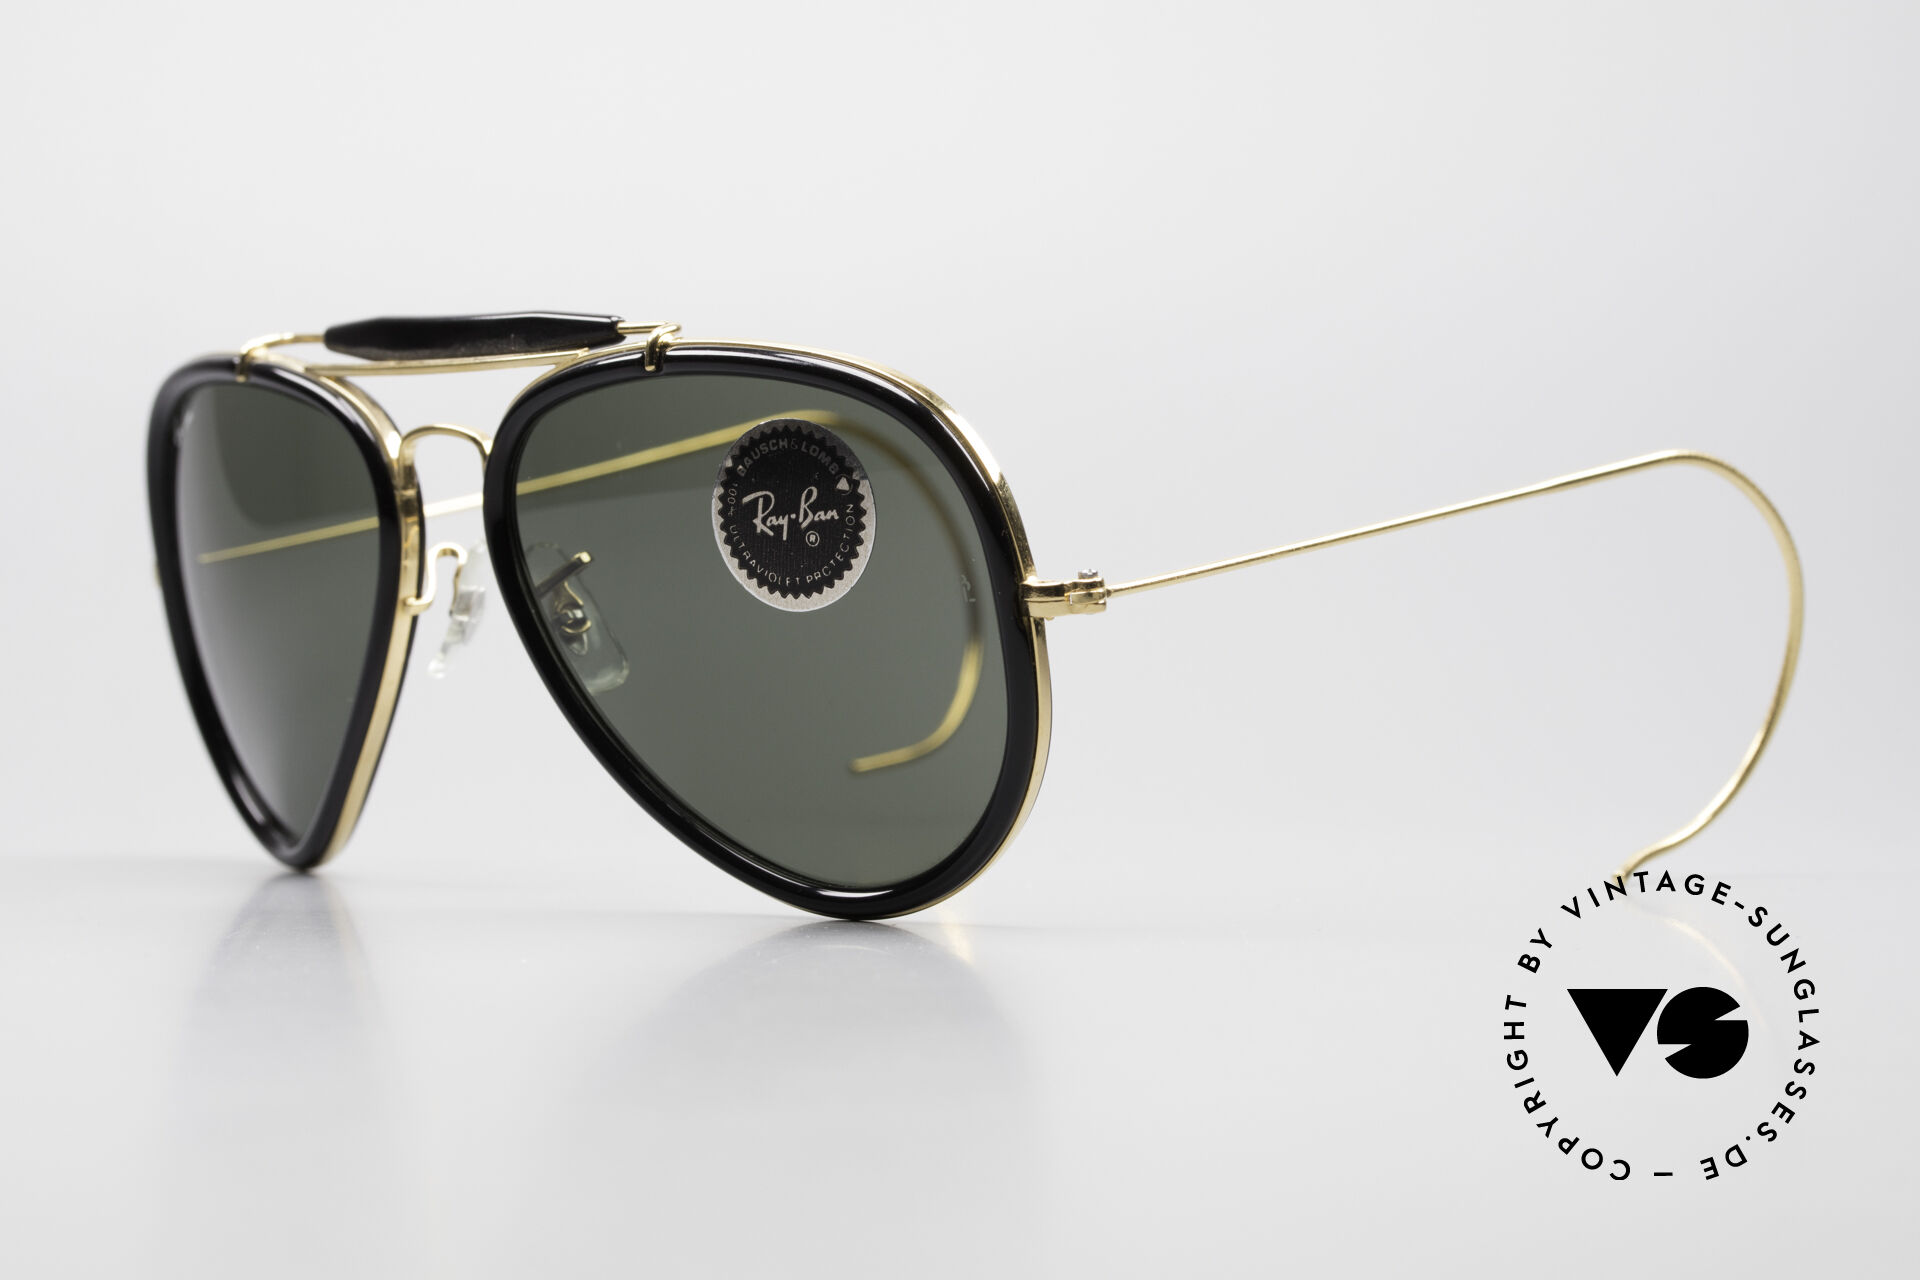 Lugar de nacimiento Notorio plataforma Sunglasses Ray Ban Traditionals Outdoorsman B&L USA Aviator Shades 80s